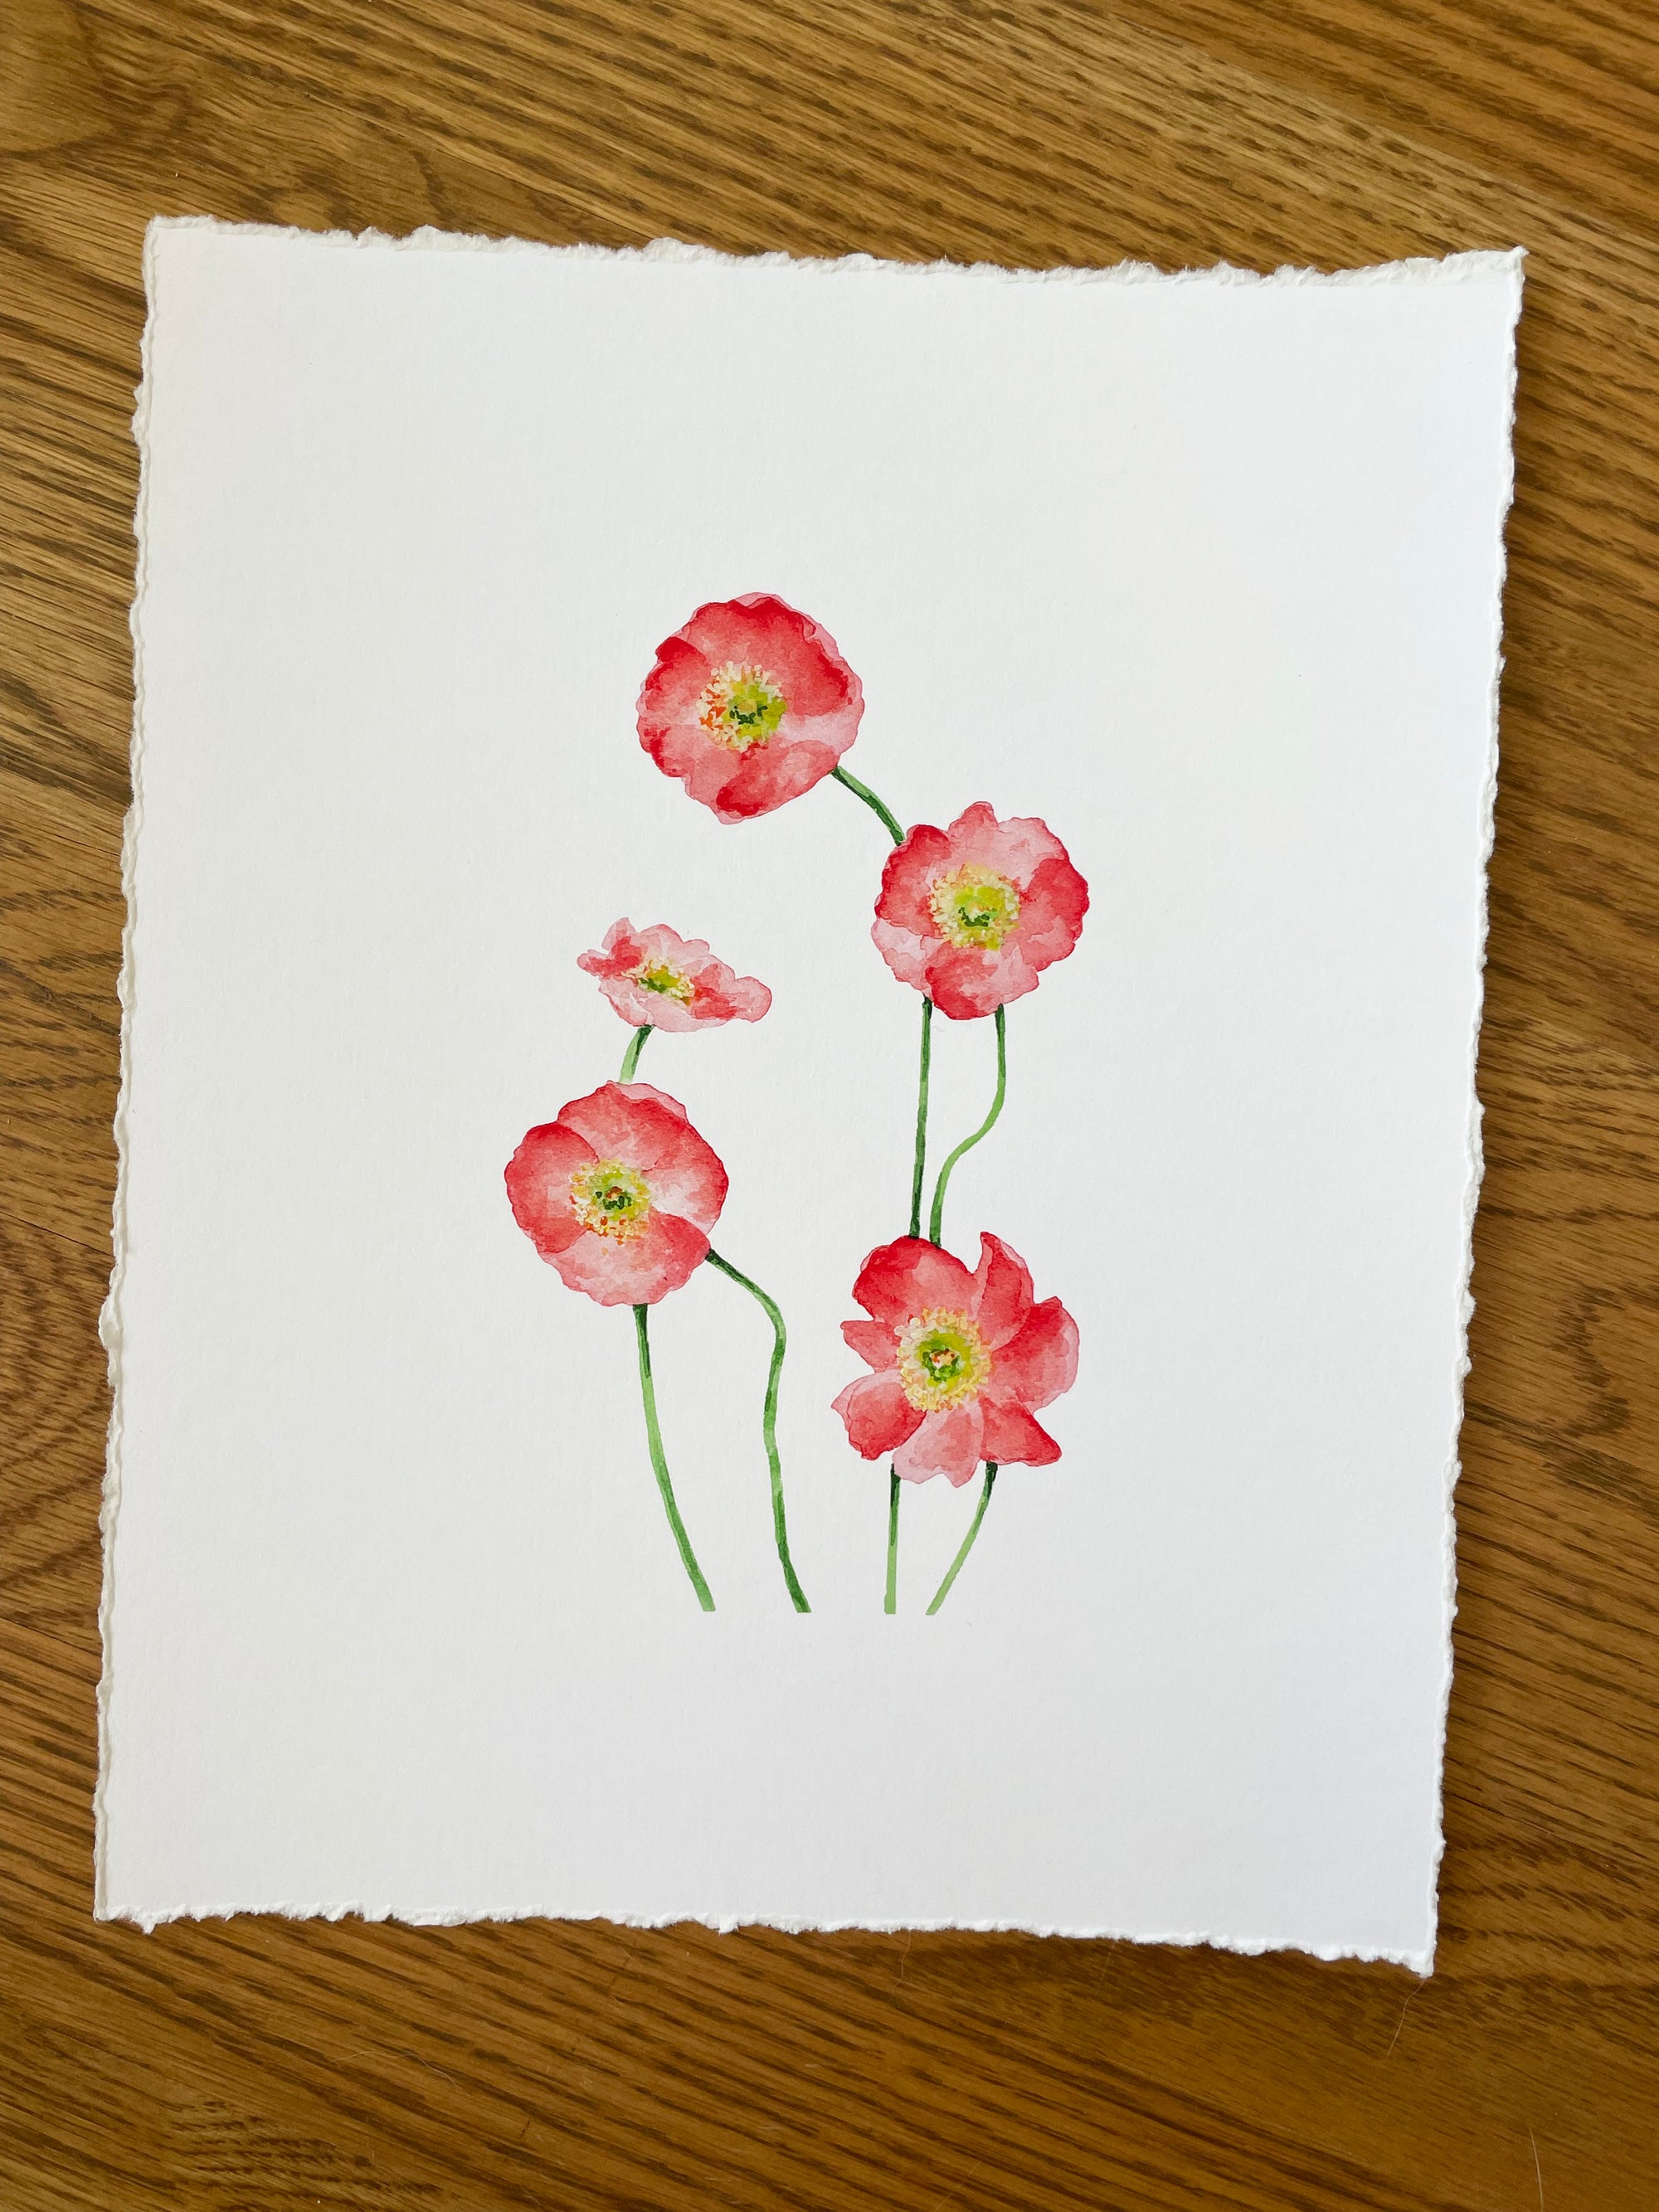 Set of 4 Floral Prints- Astilbe, Carnation, Tulip, Sweet Pea